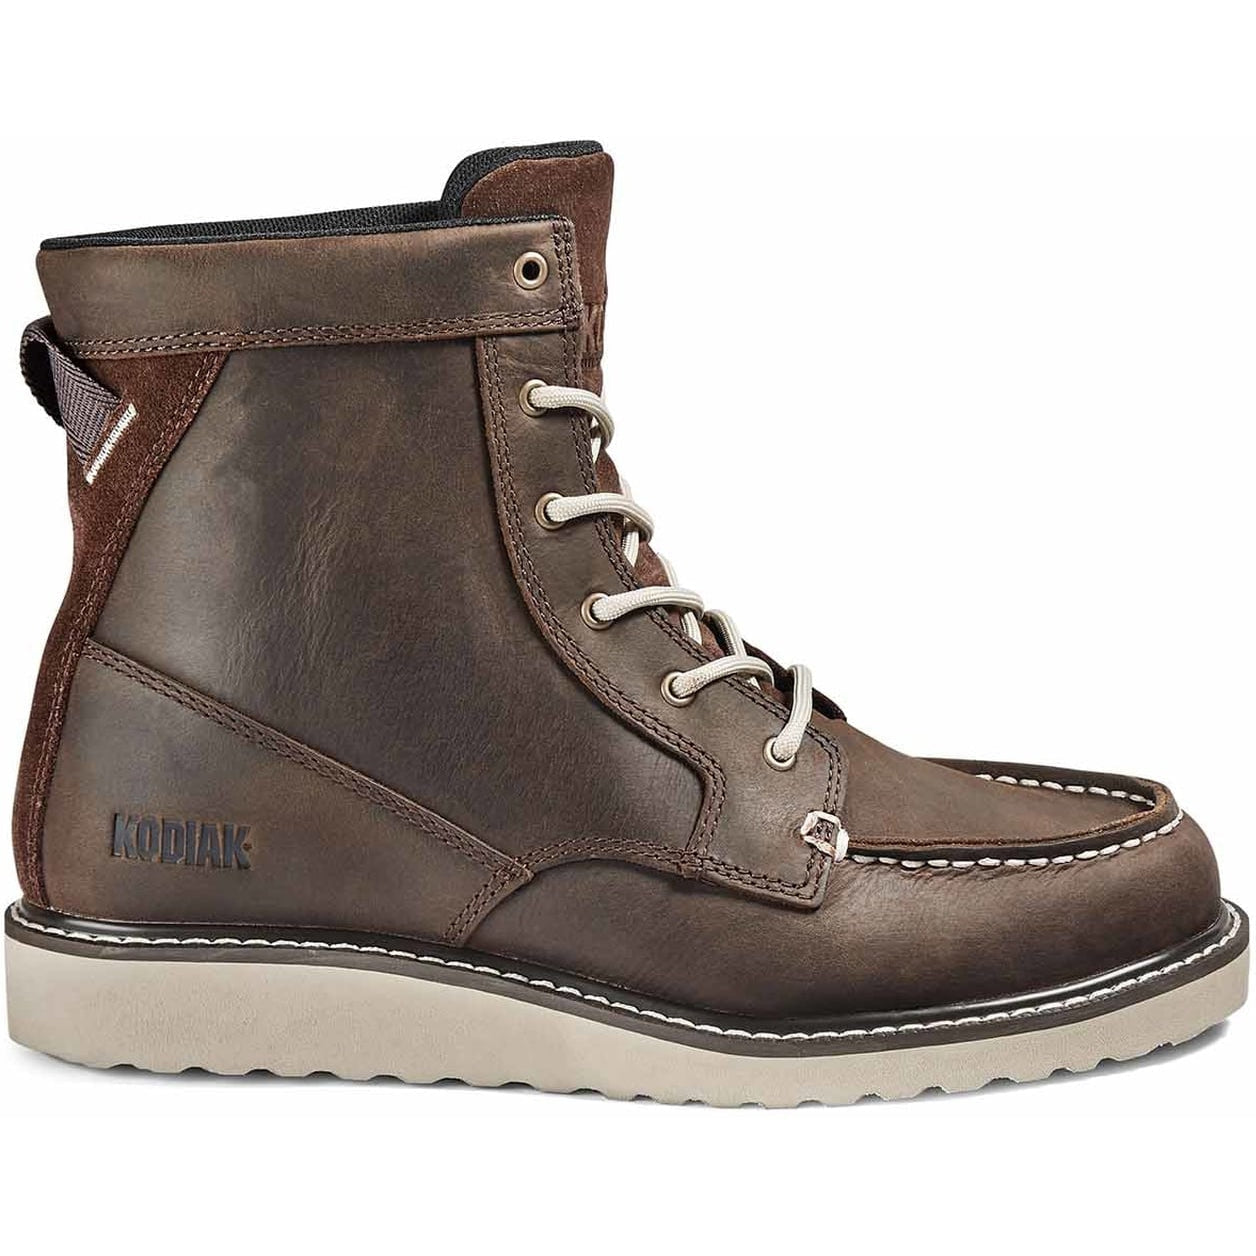 Kodiak Women's Whitton 6" Soft Toe Safety Work Boot -Brown- 4THKDB 5 / Medium / Brown - Overlook Boots